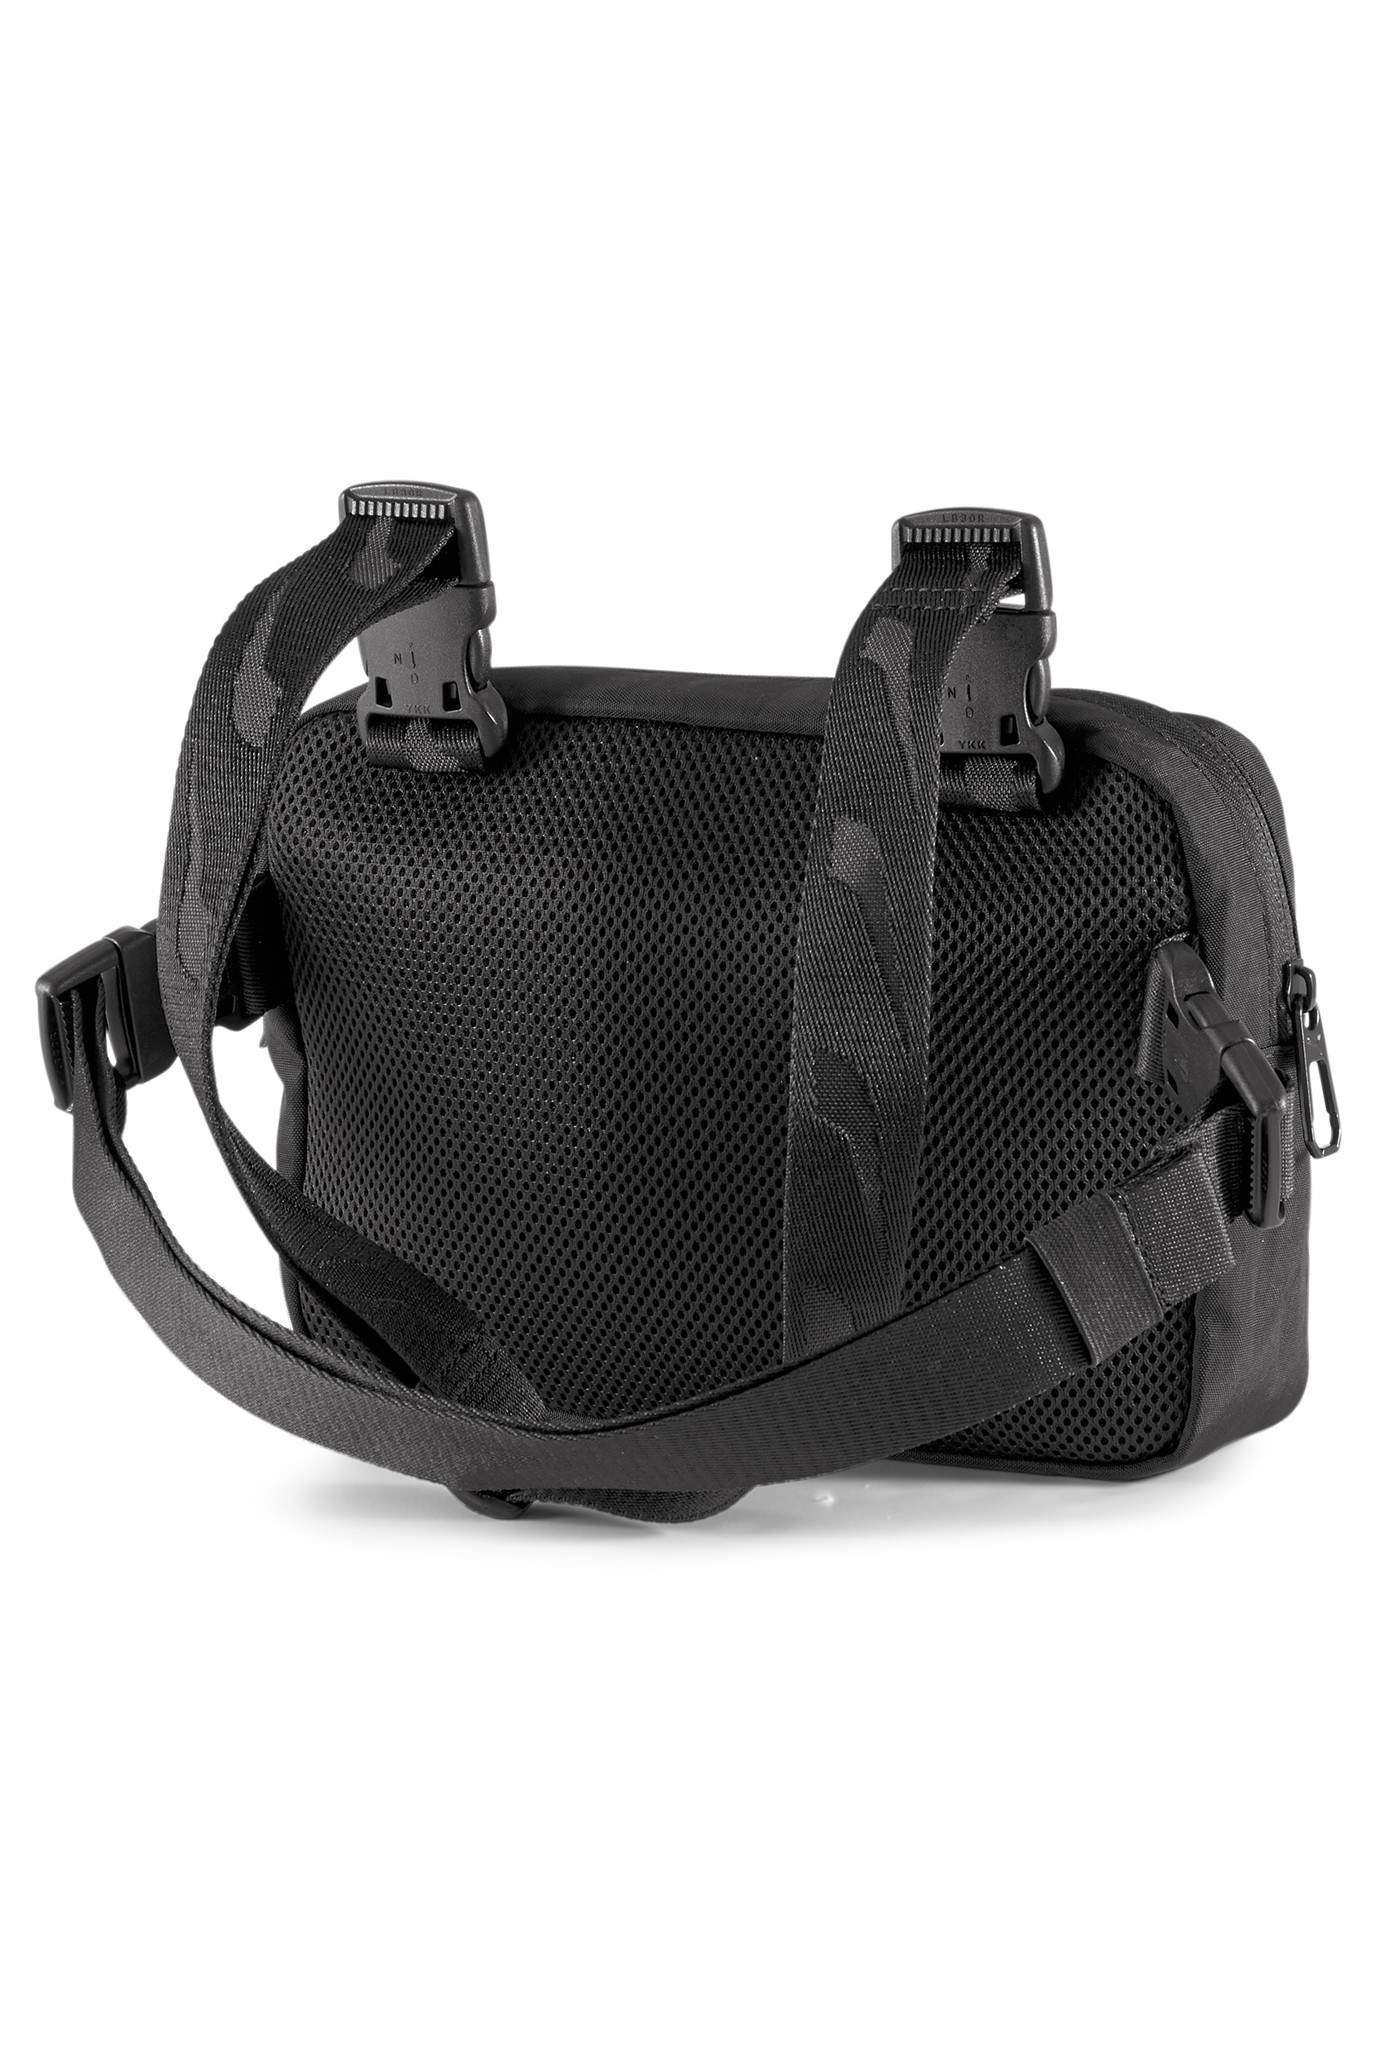 PUMA MOMENTUM WAIST PACK BAG Three Bag | eBay